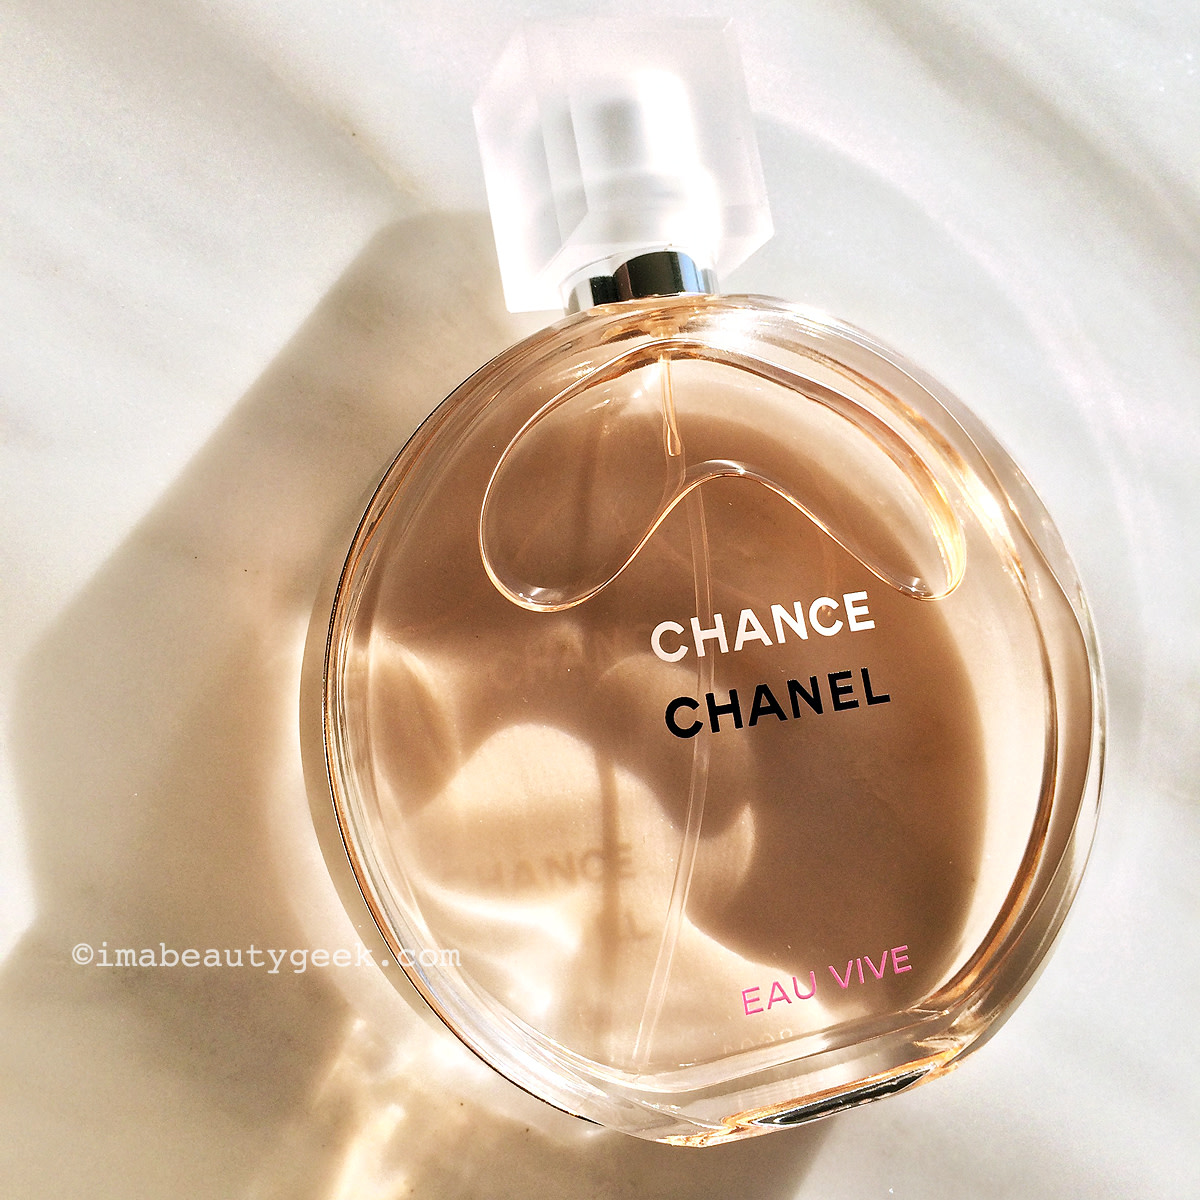 Spraycation fragrance: Chanel Chance Eau Vive